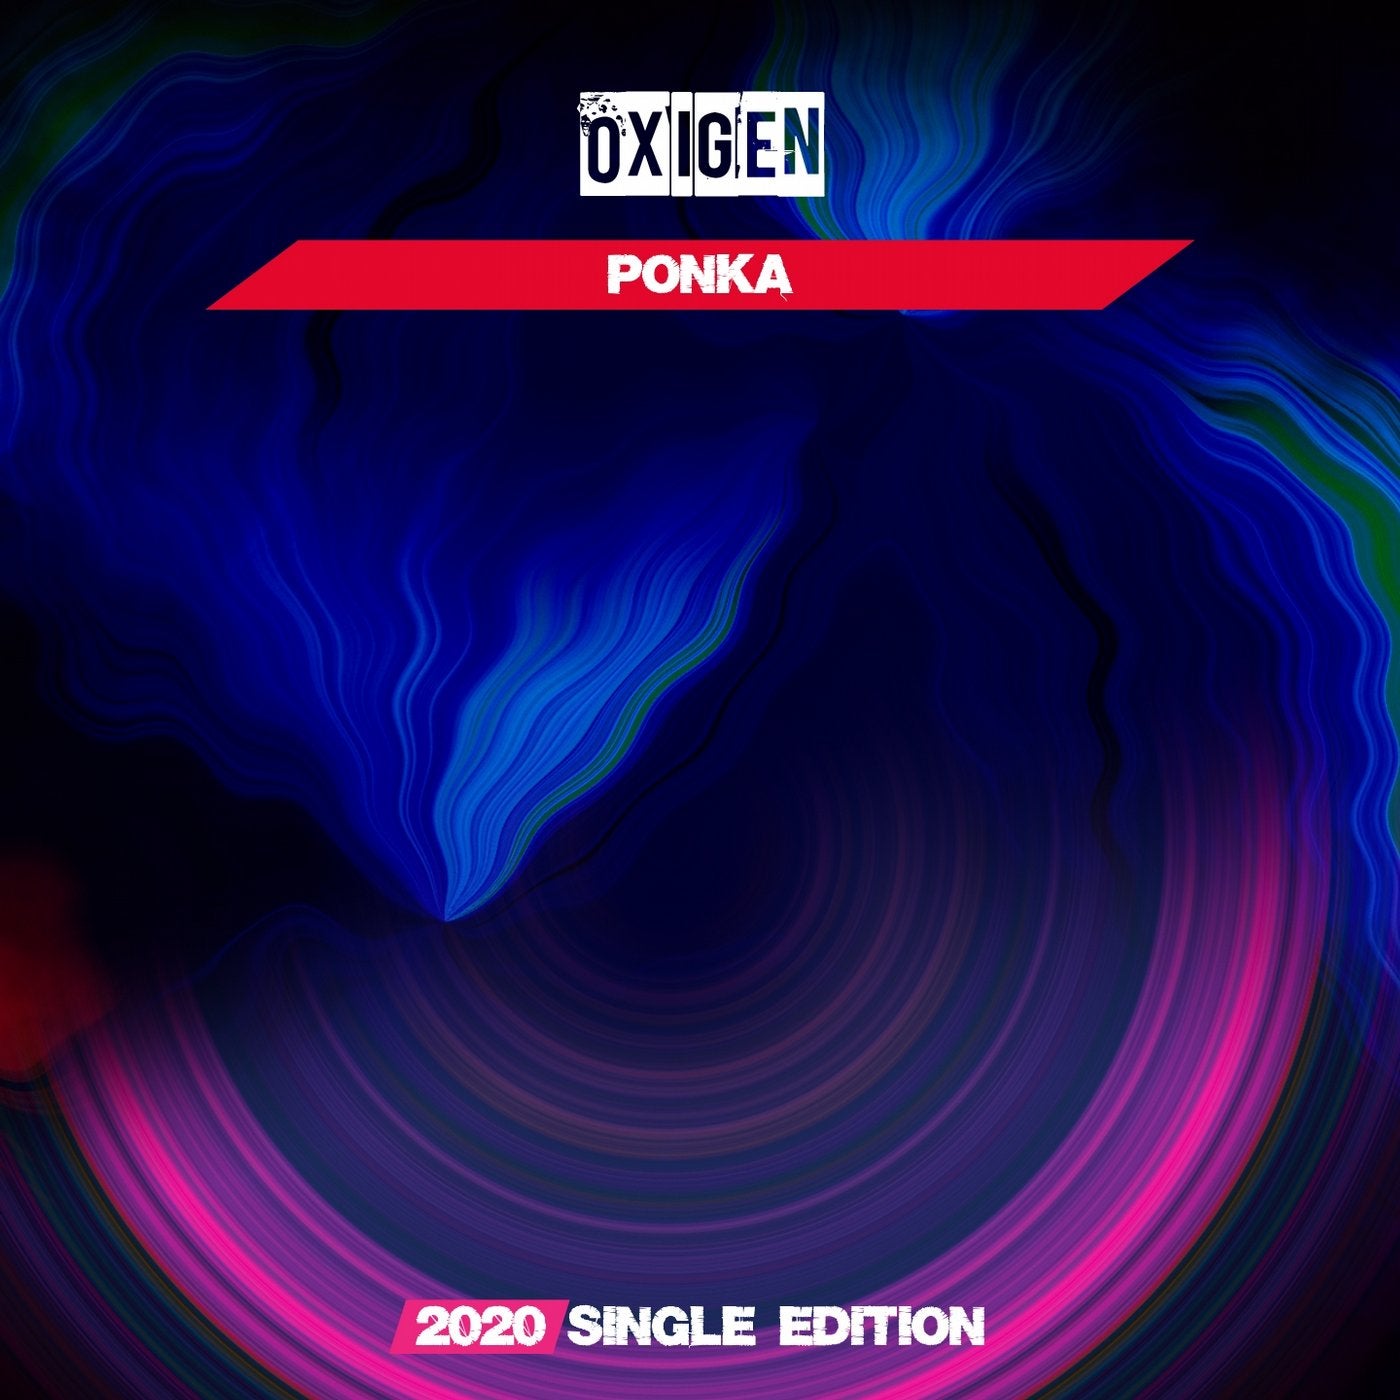 Ponka (2020 Short Radio)